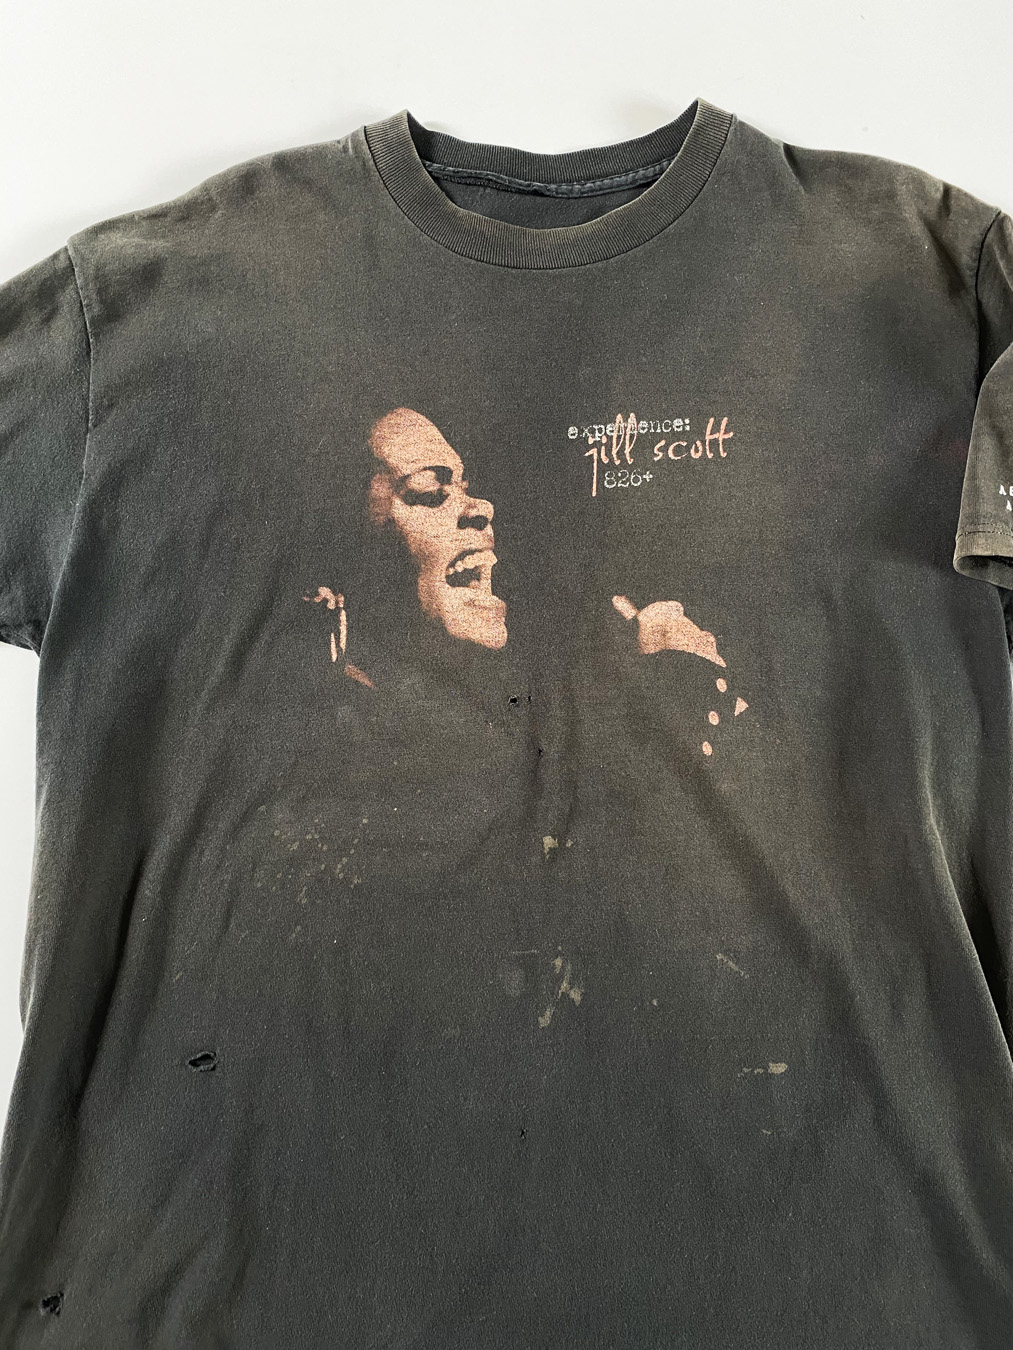 Vintage 2001 Jill Scott 826+ Live Album Distressed T-Shirt